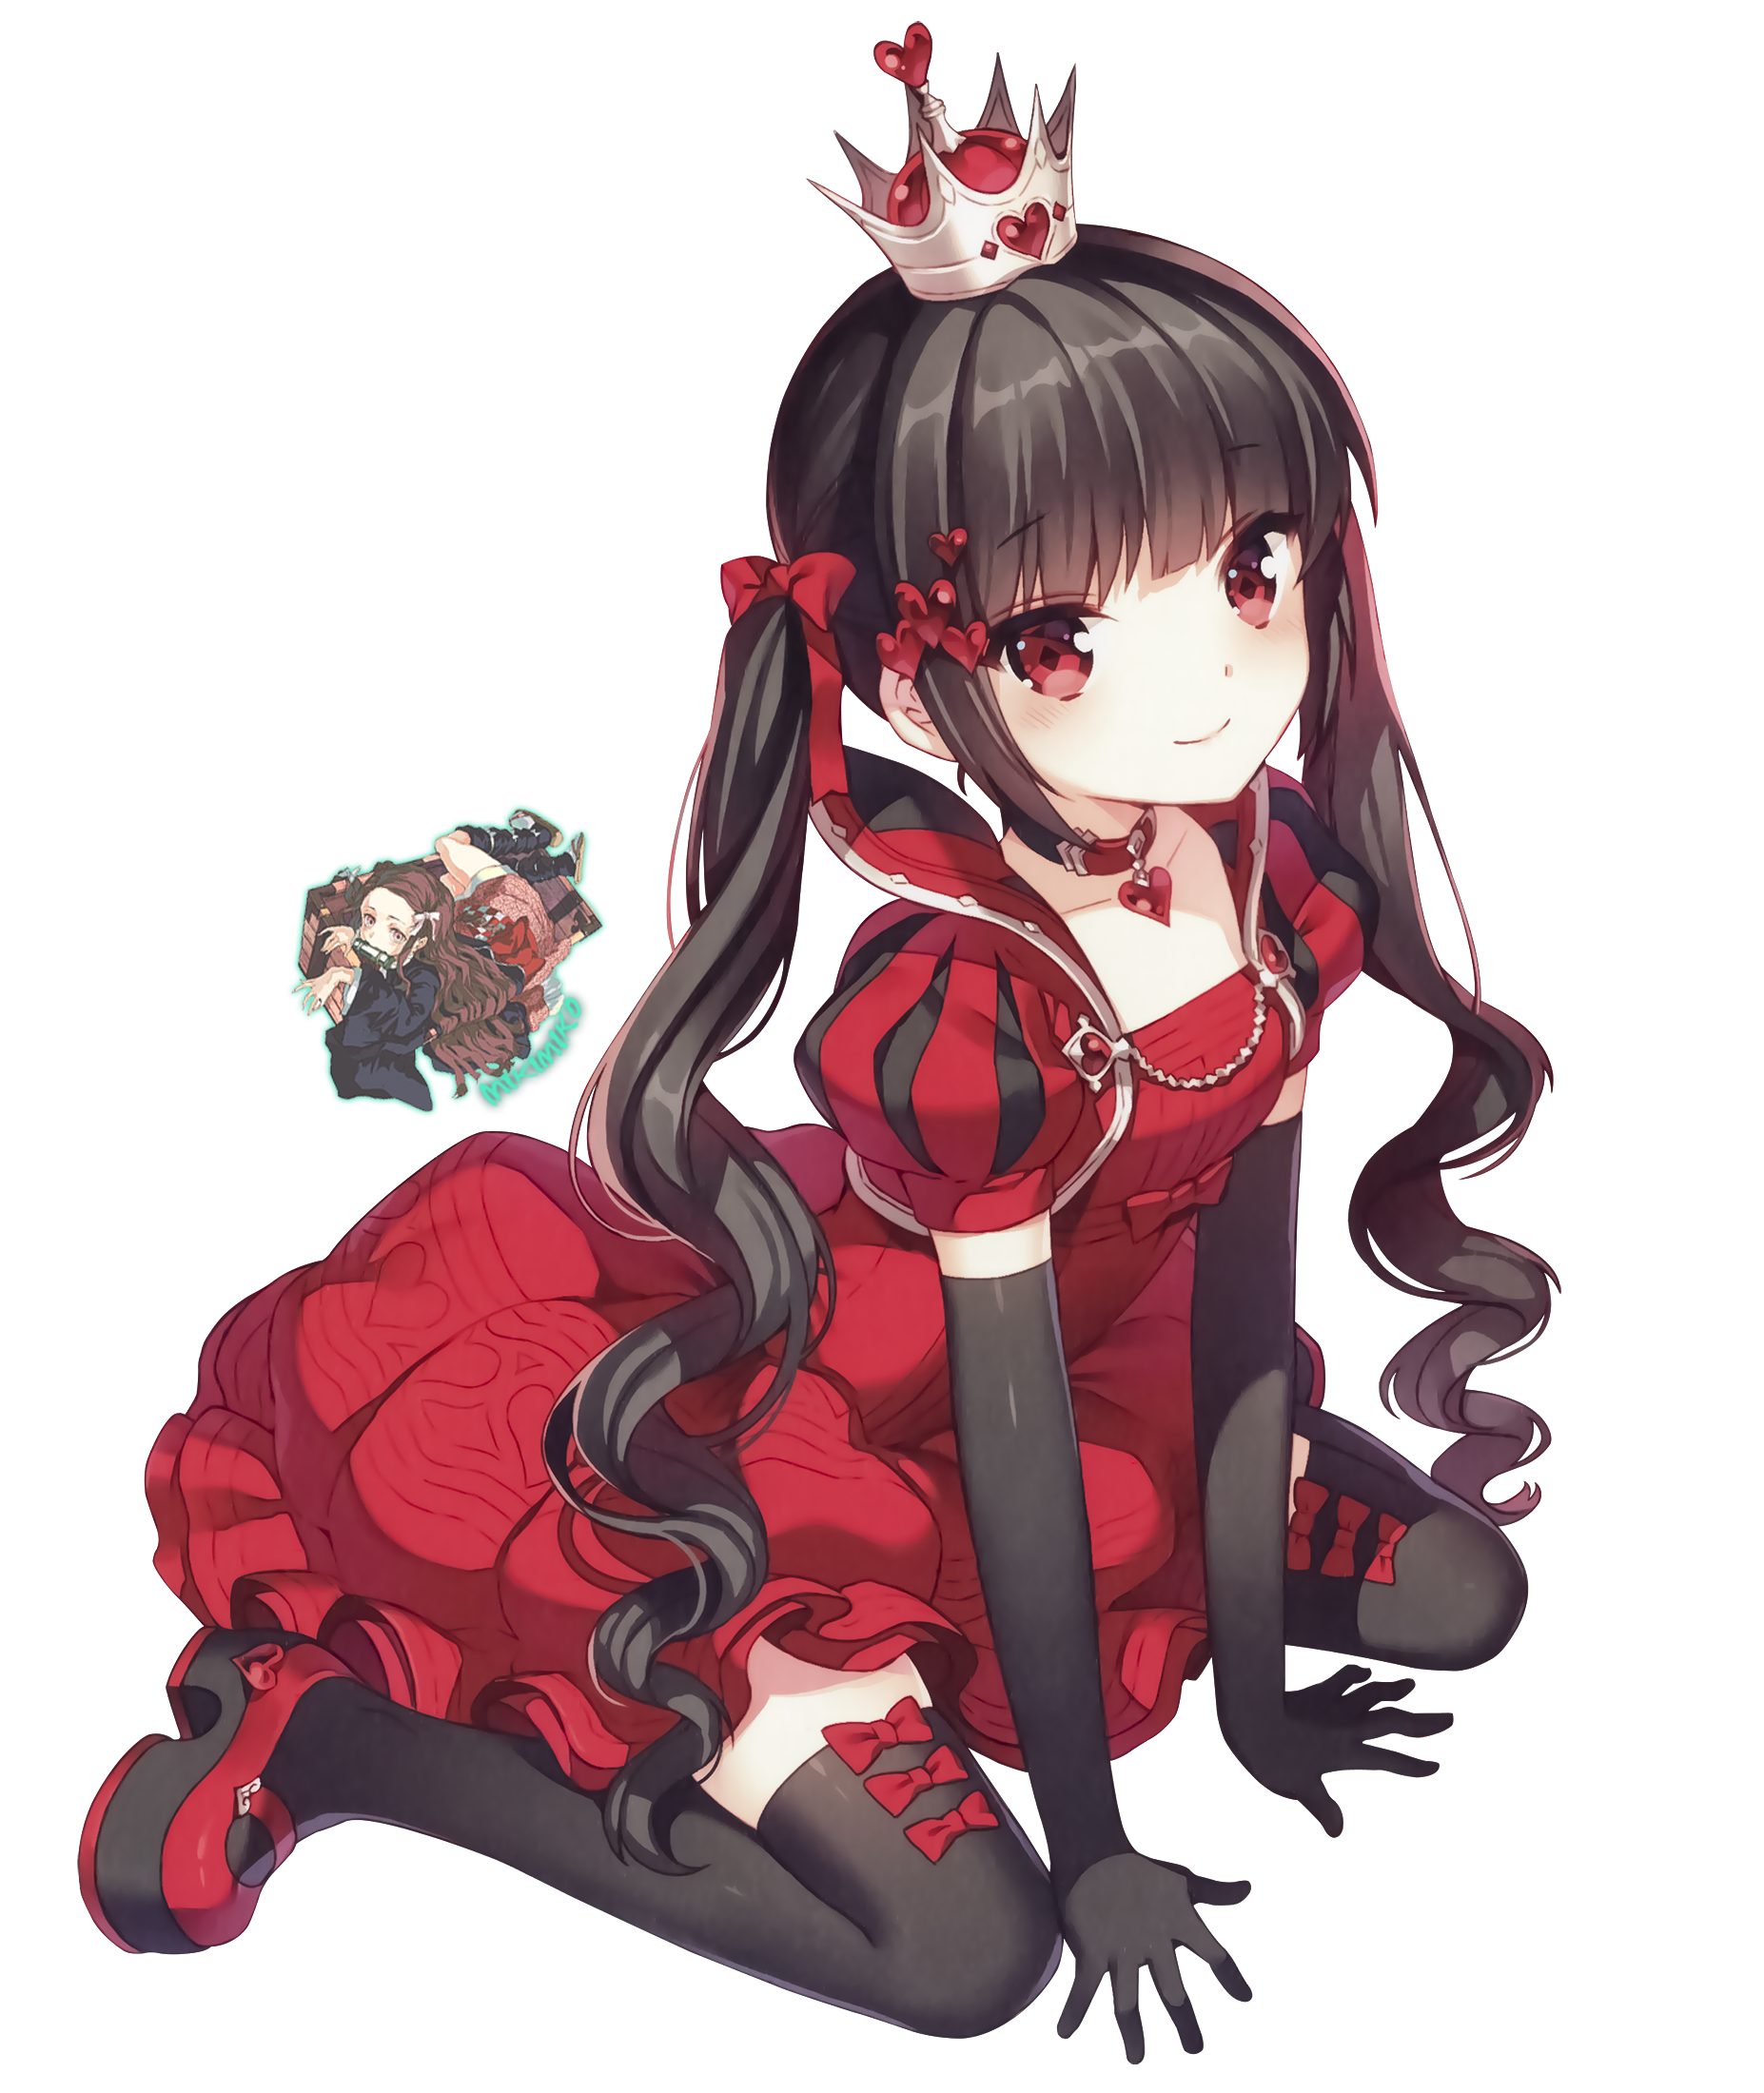 Anime Cute Girl Red Circle Avatar Stock Illustration 2354168613